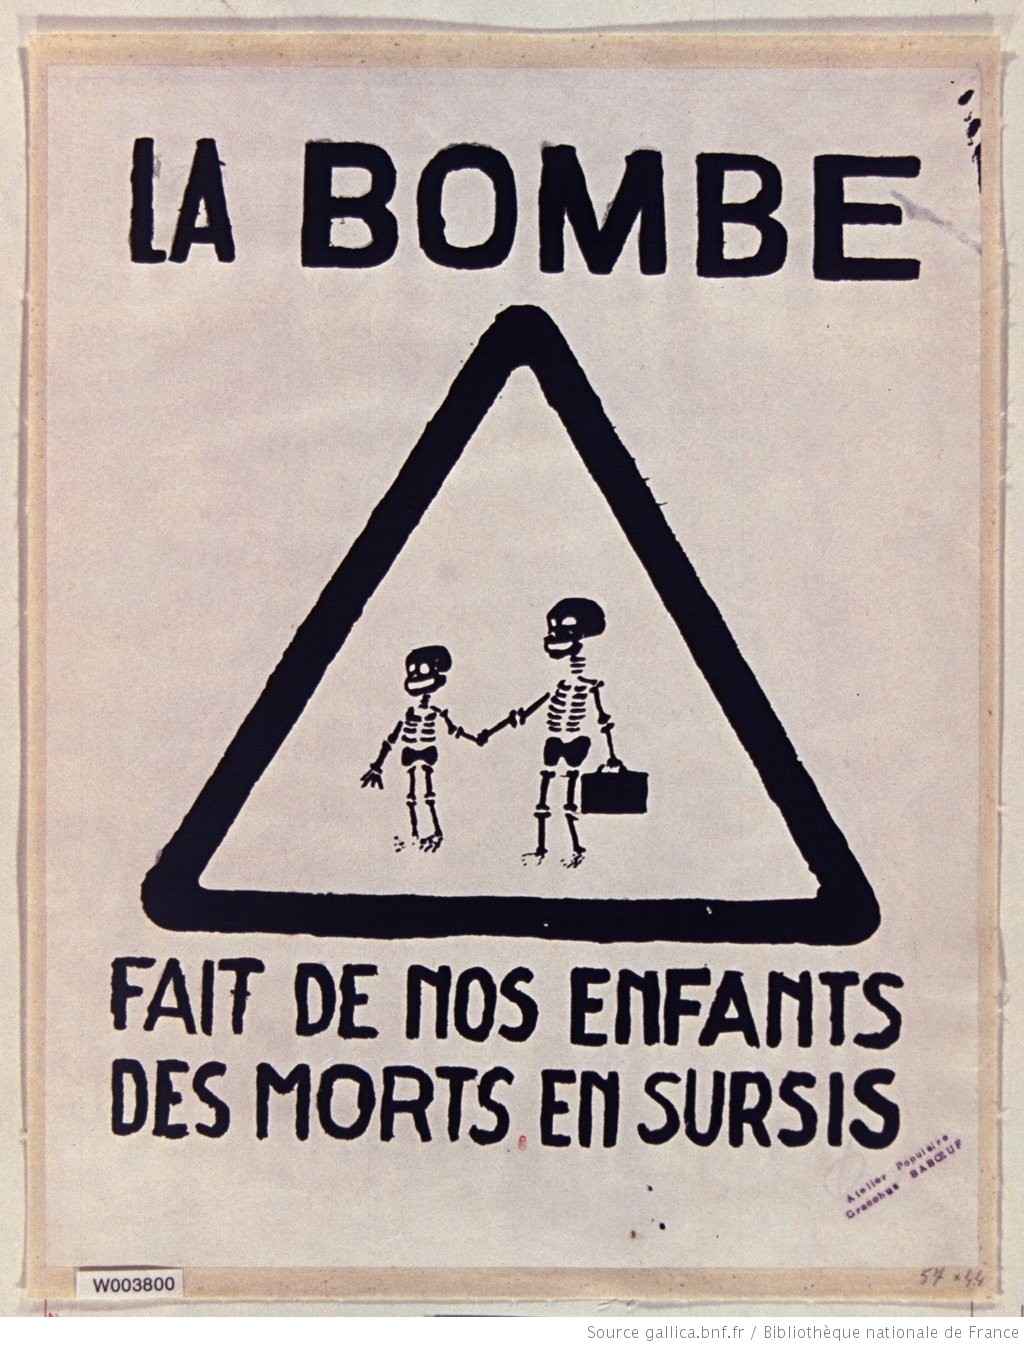  uprising flyers posters Paris France art